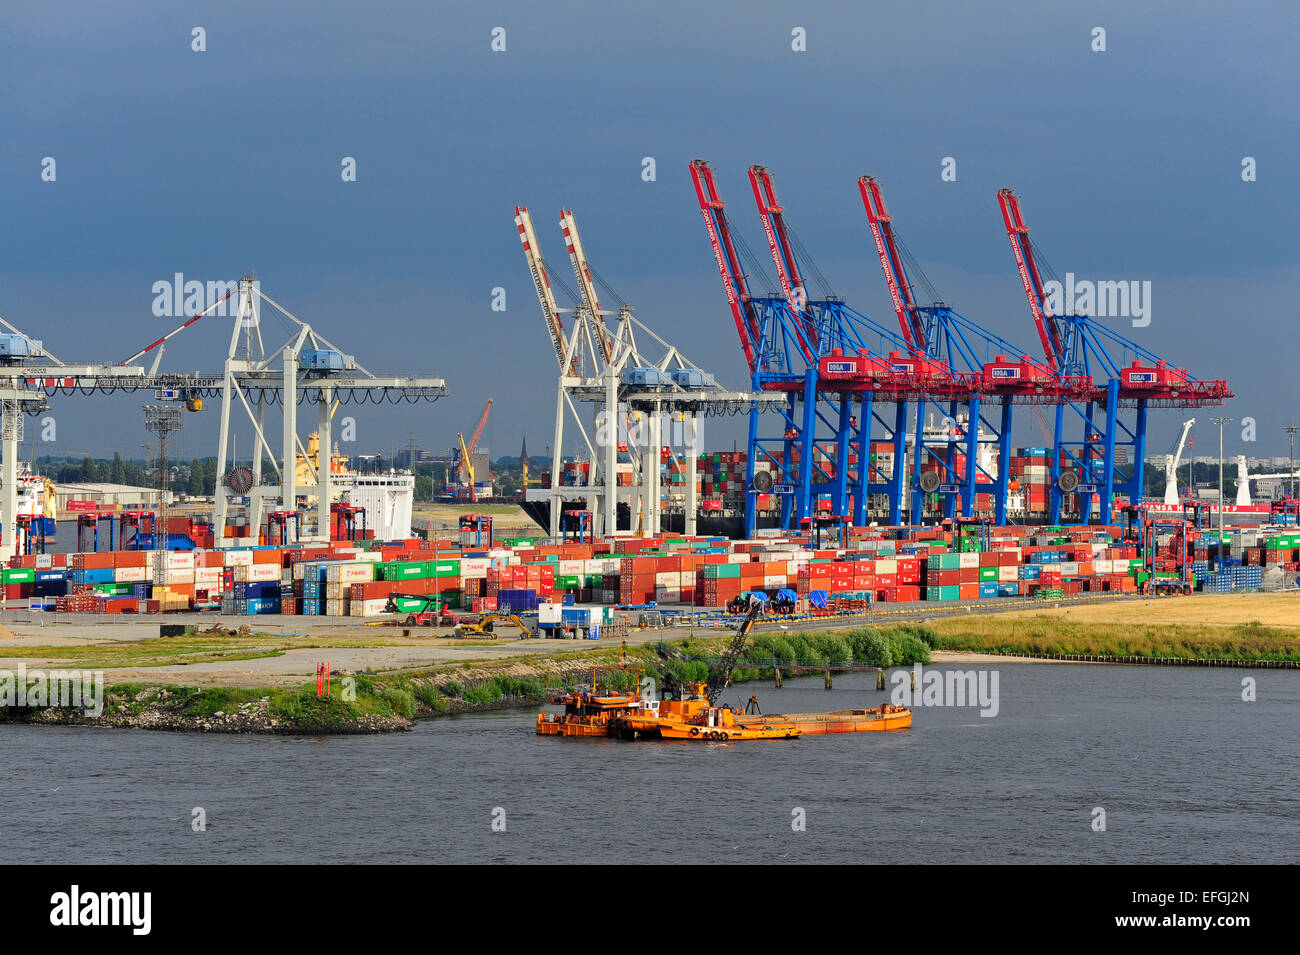 Gantry cranes for container terminal Tollerort, Steinwerder, Hamburg harbor on the Elbe, Hamburg, Germany Stock Photo